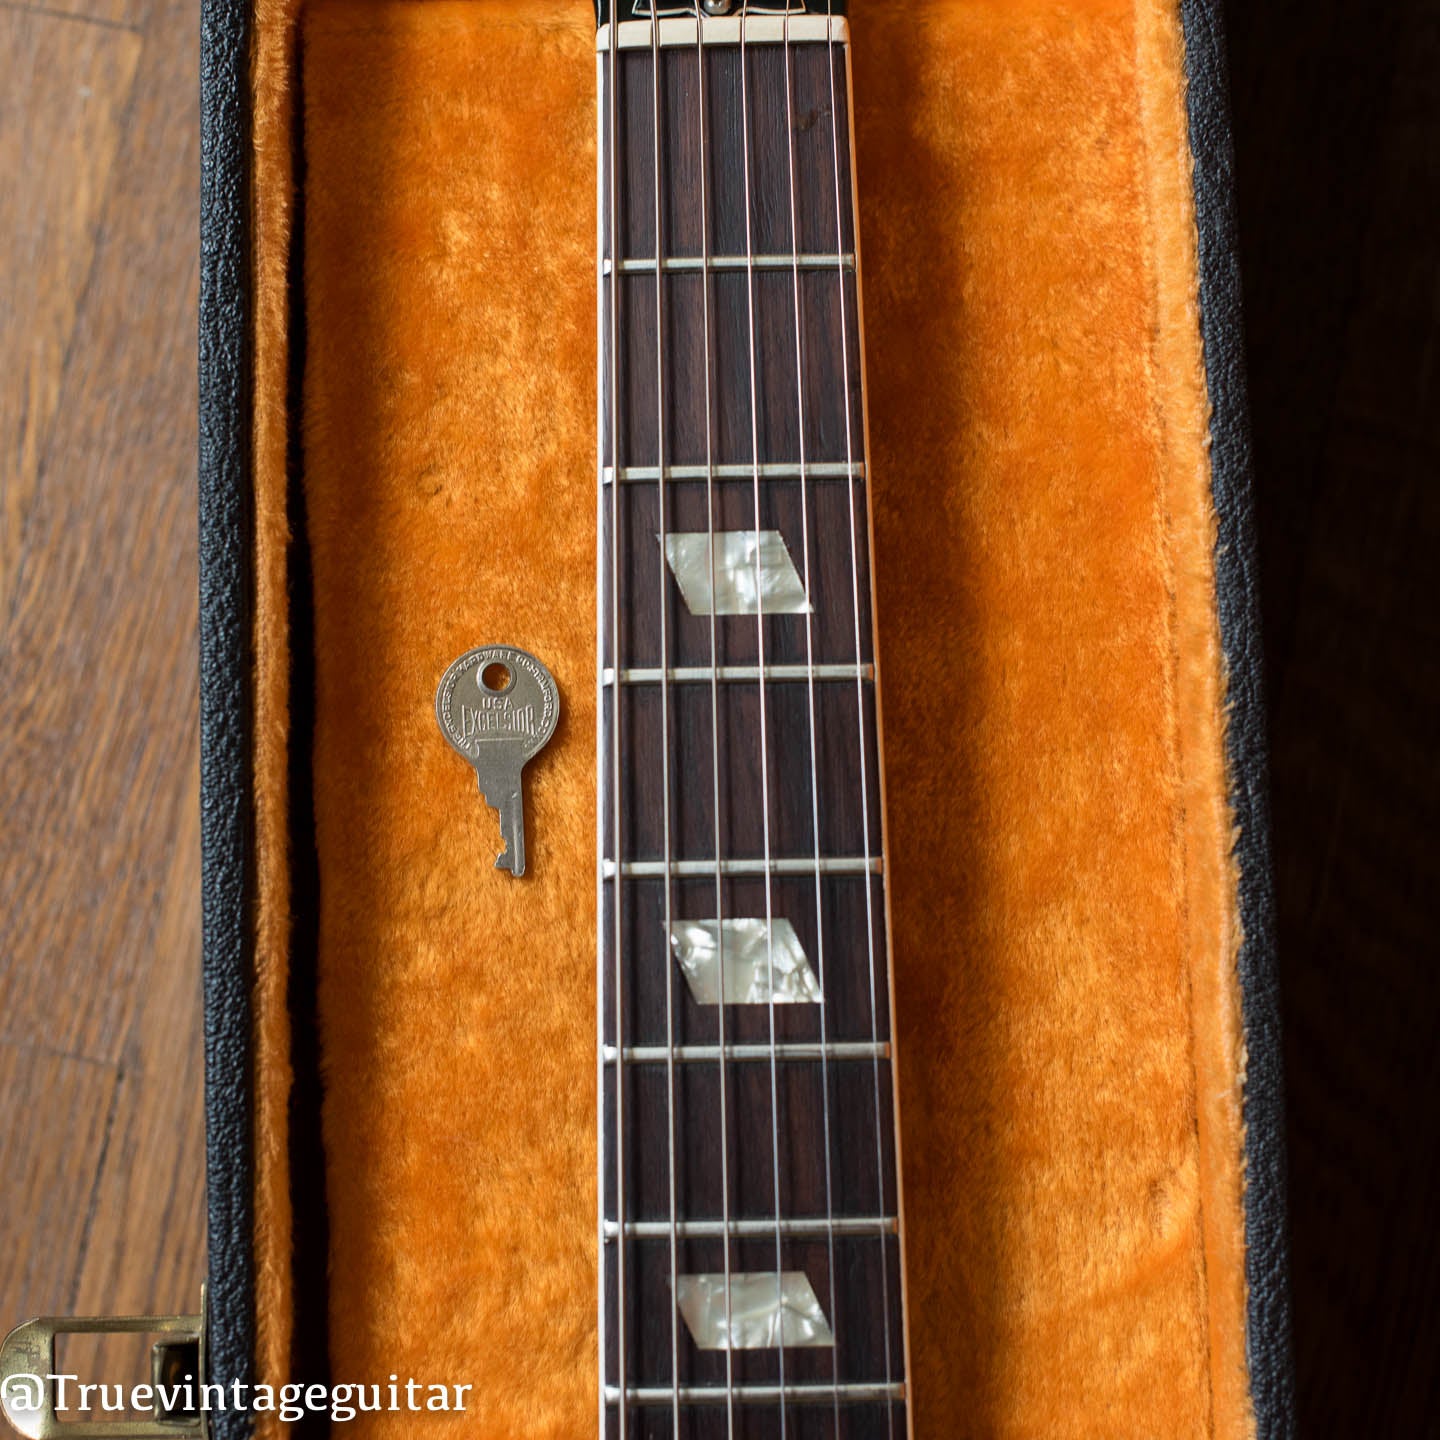 Special parallelogram fretboard inlays, Vintage 1969 Gibson ES-335 td electric guitar